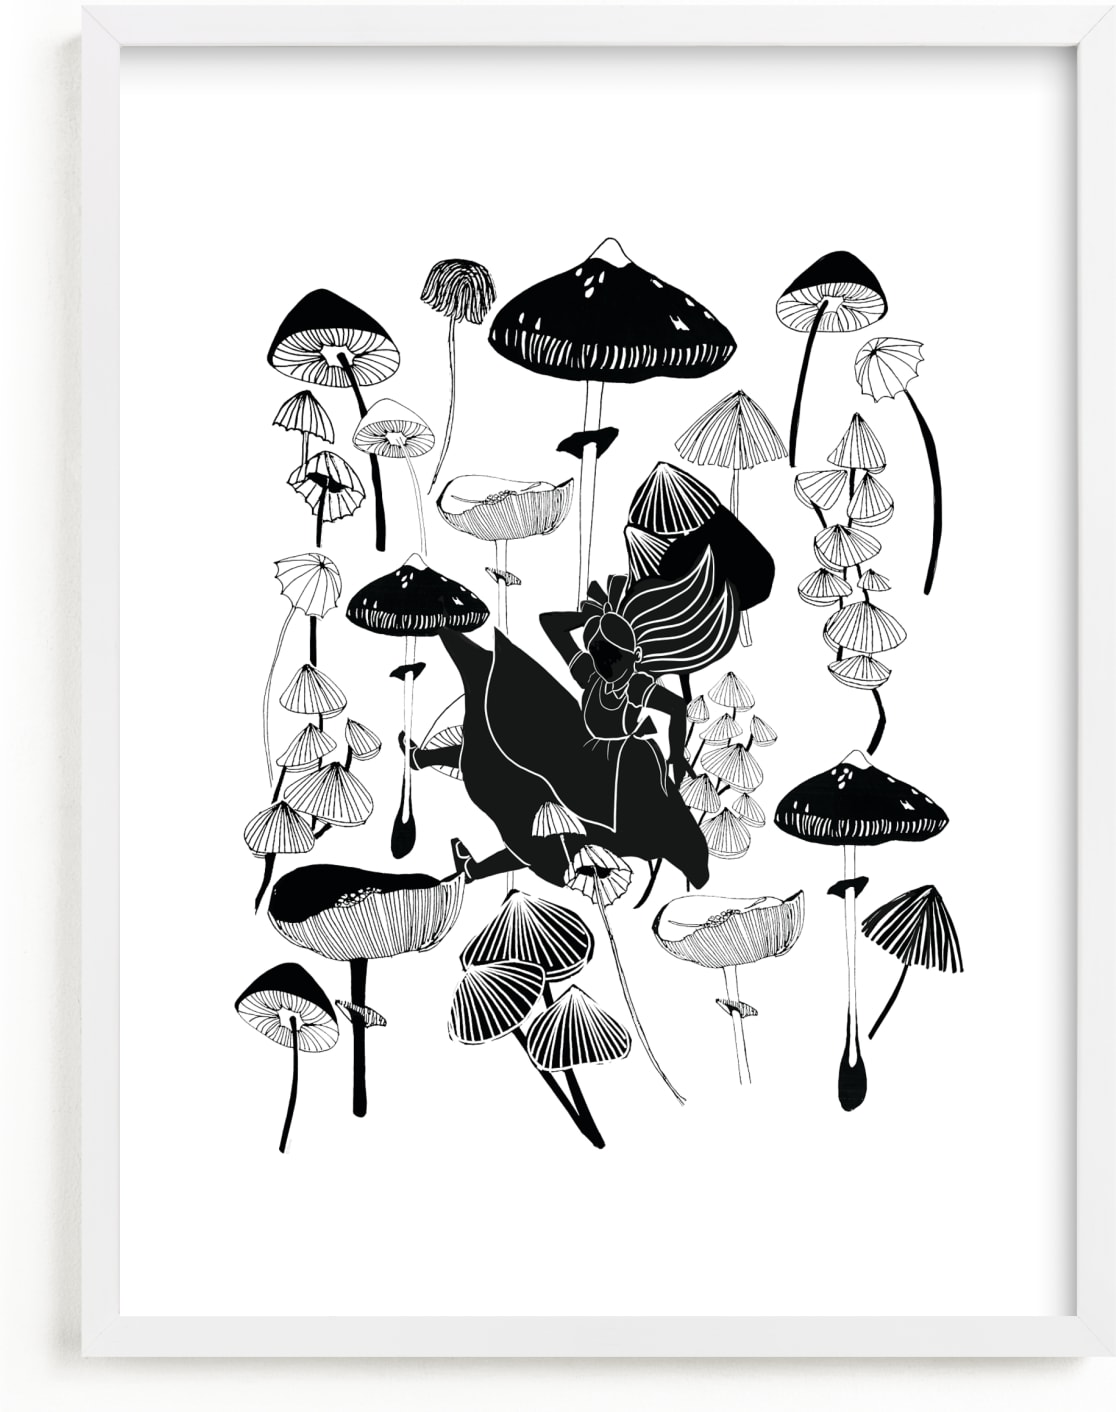 This is a black and white disney art by Deborah Velasquez called Disney's Alice In Wonderland Mushroom Fall.